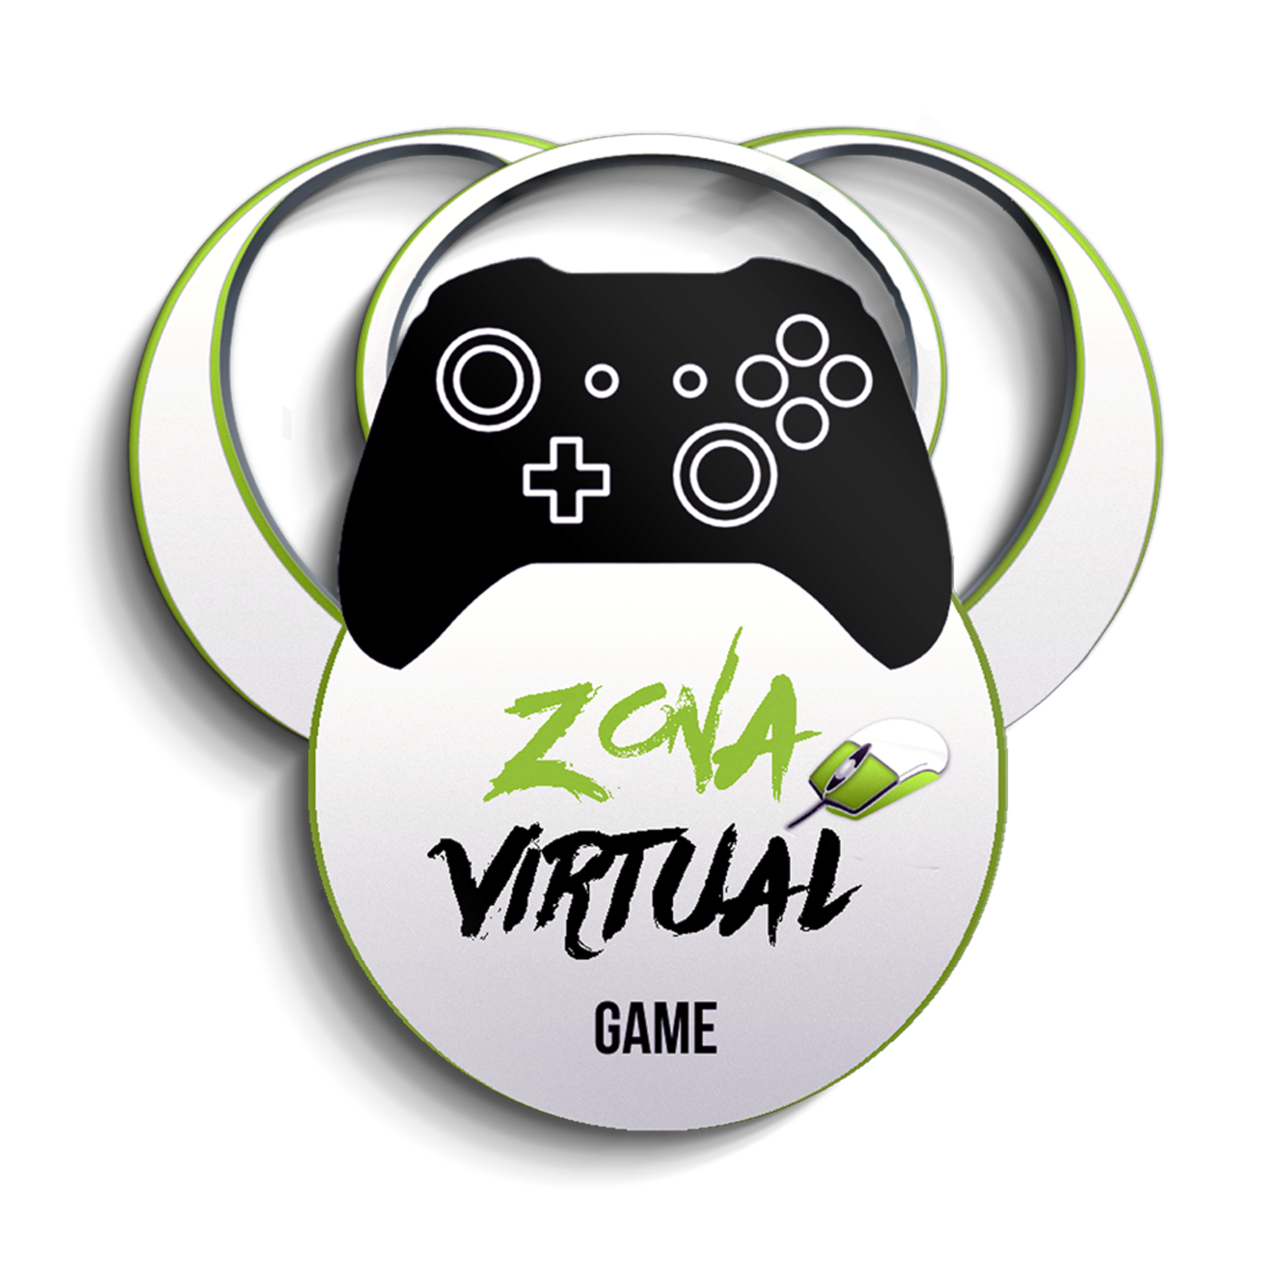 Zona Virtual